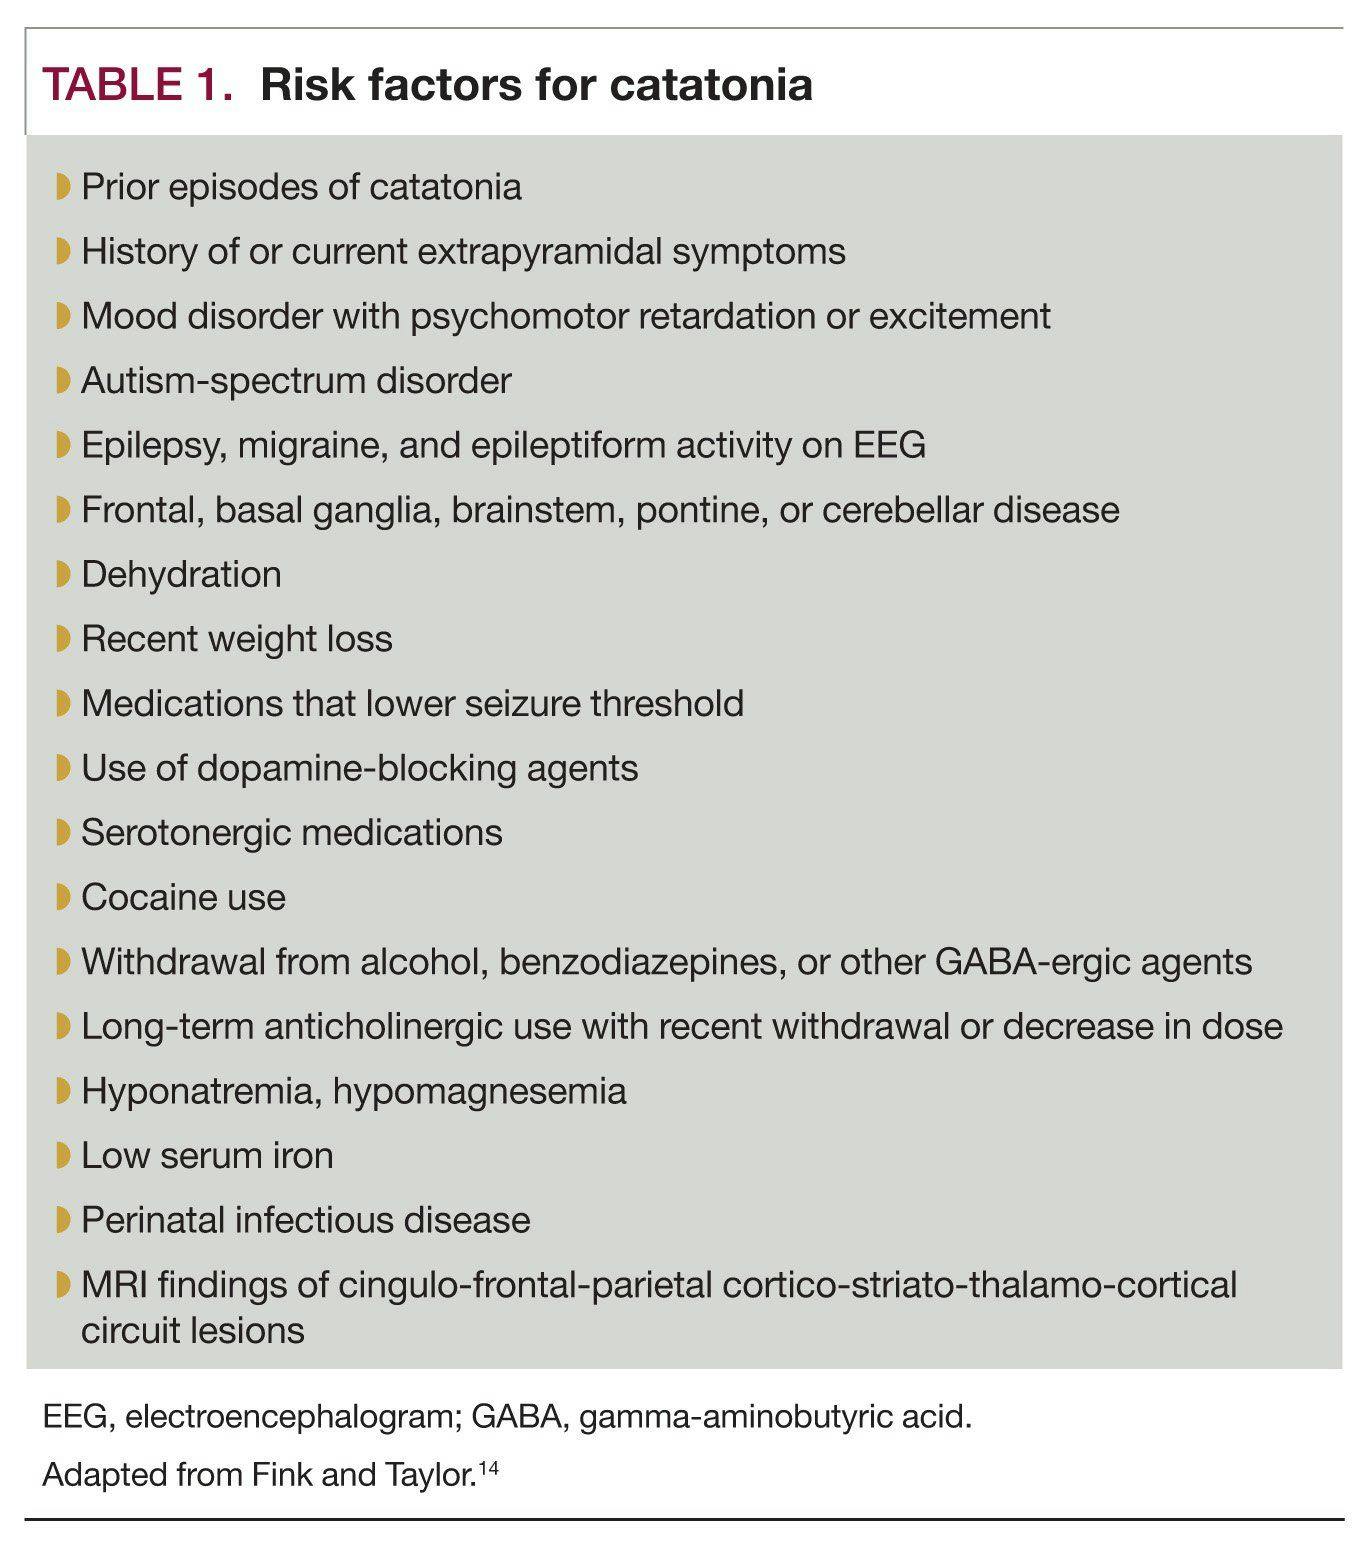 Risk factors for catatonia